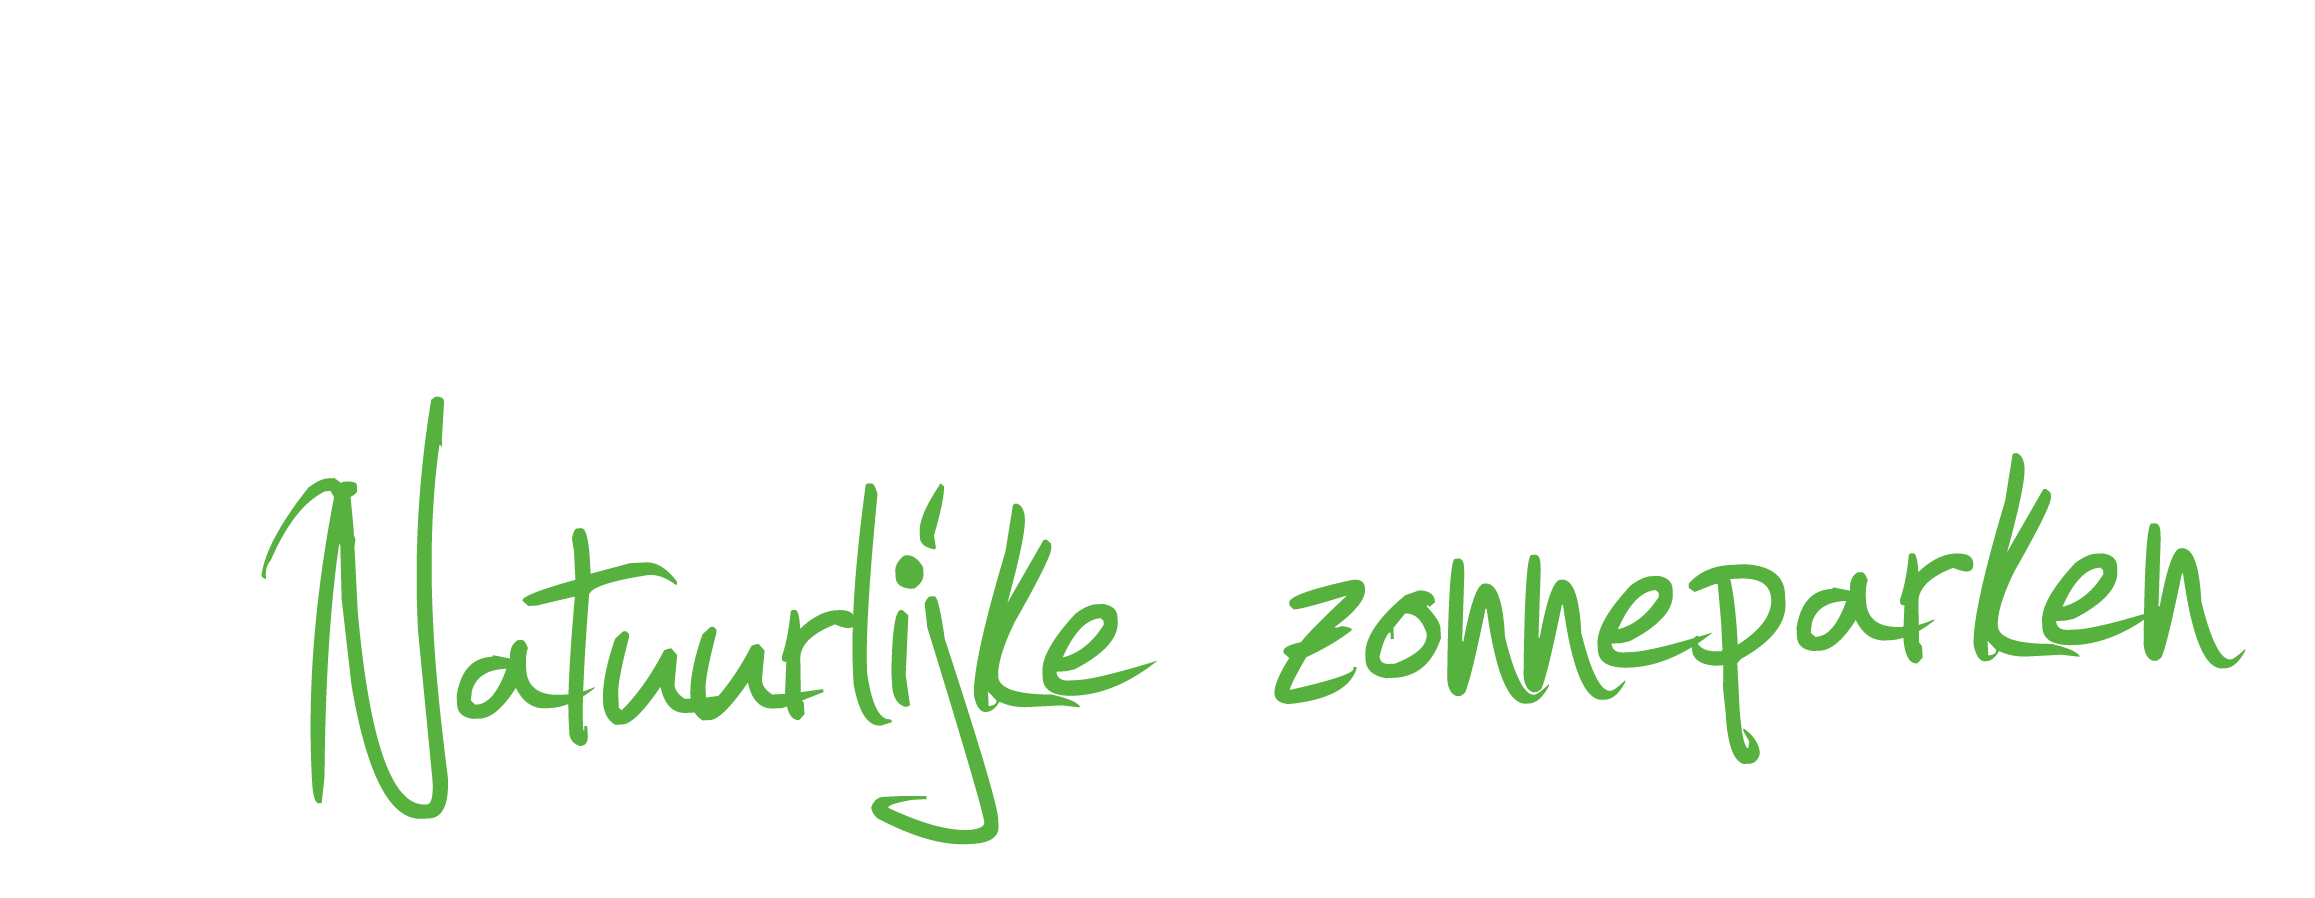 Sunvest logo wit en groen